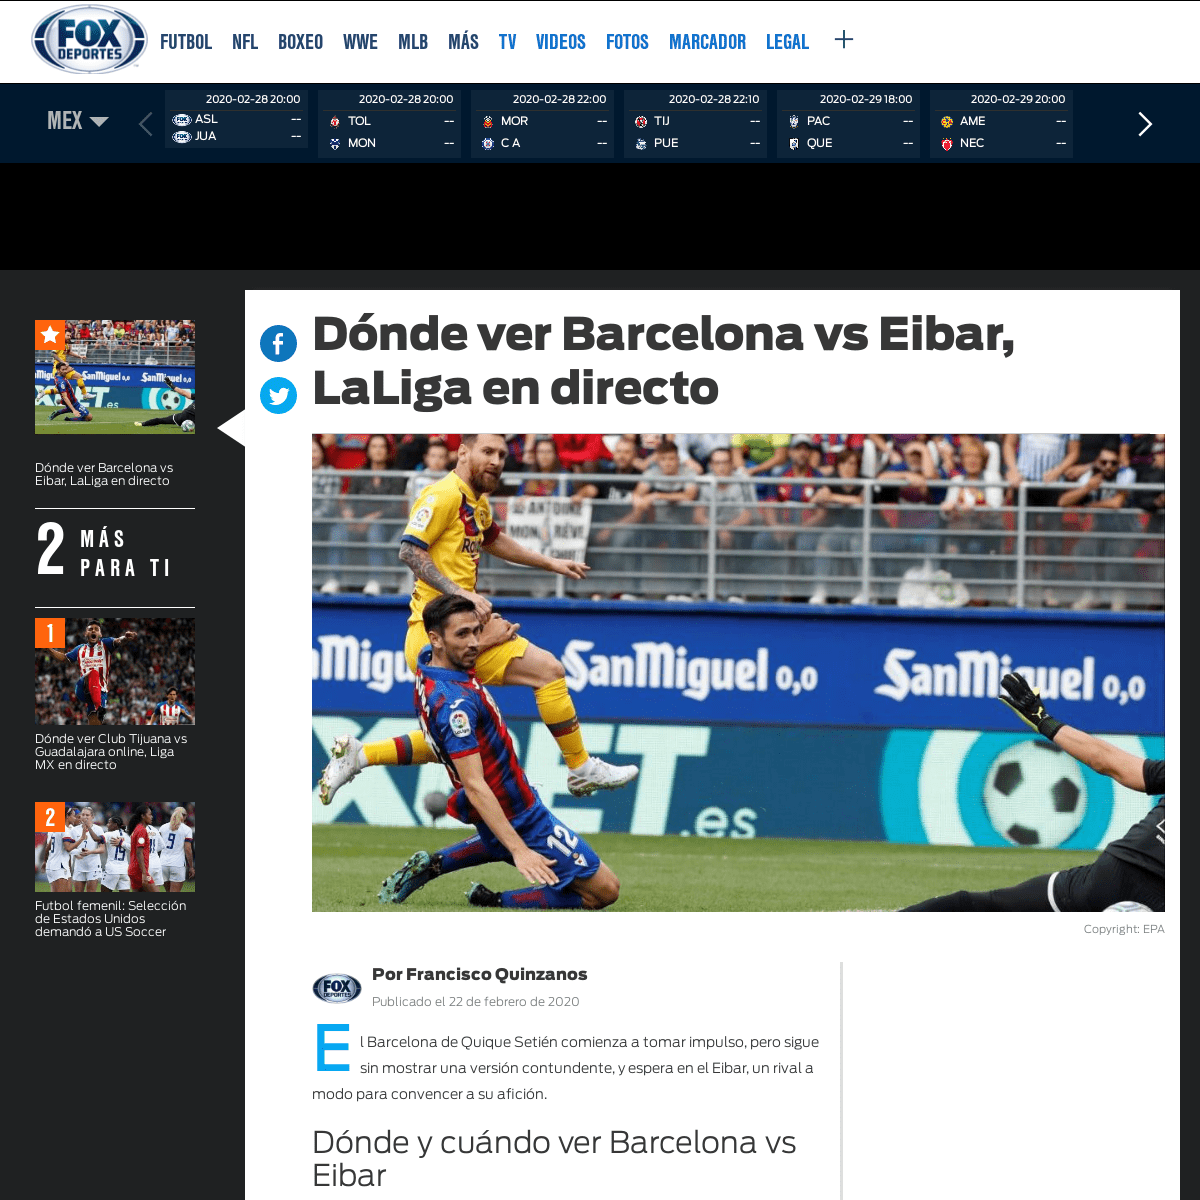 A complete backup of www.foxdeportes.com/futbol/story/donde-ver-barcelona-vs-eibar-laliga-en-directo/